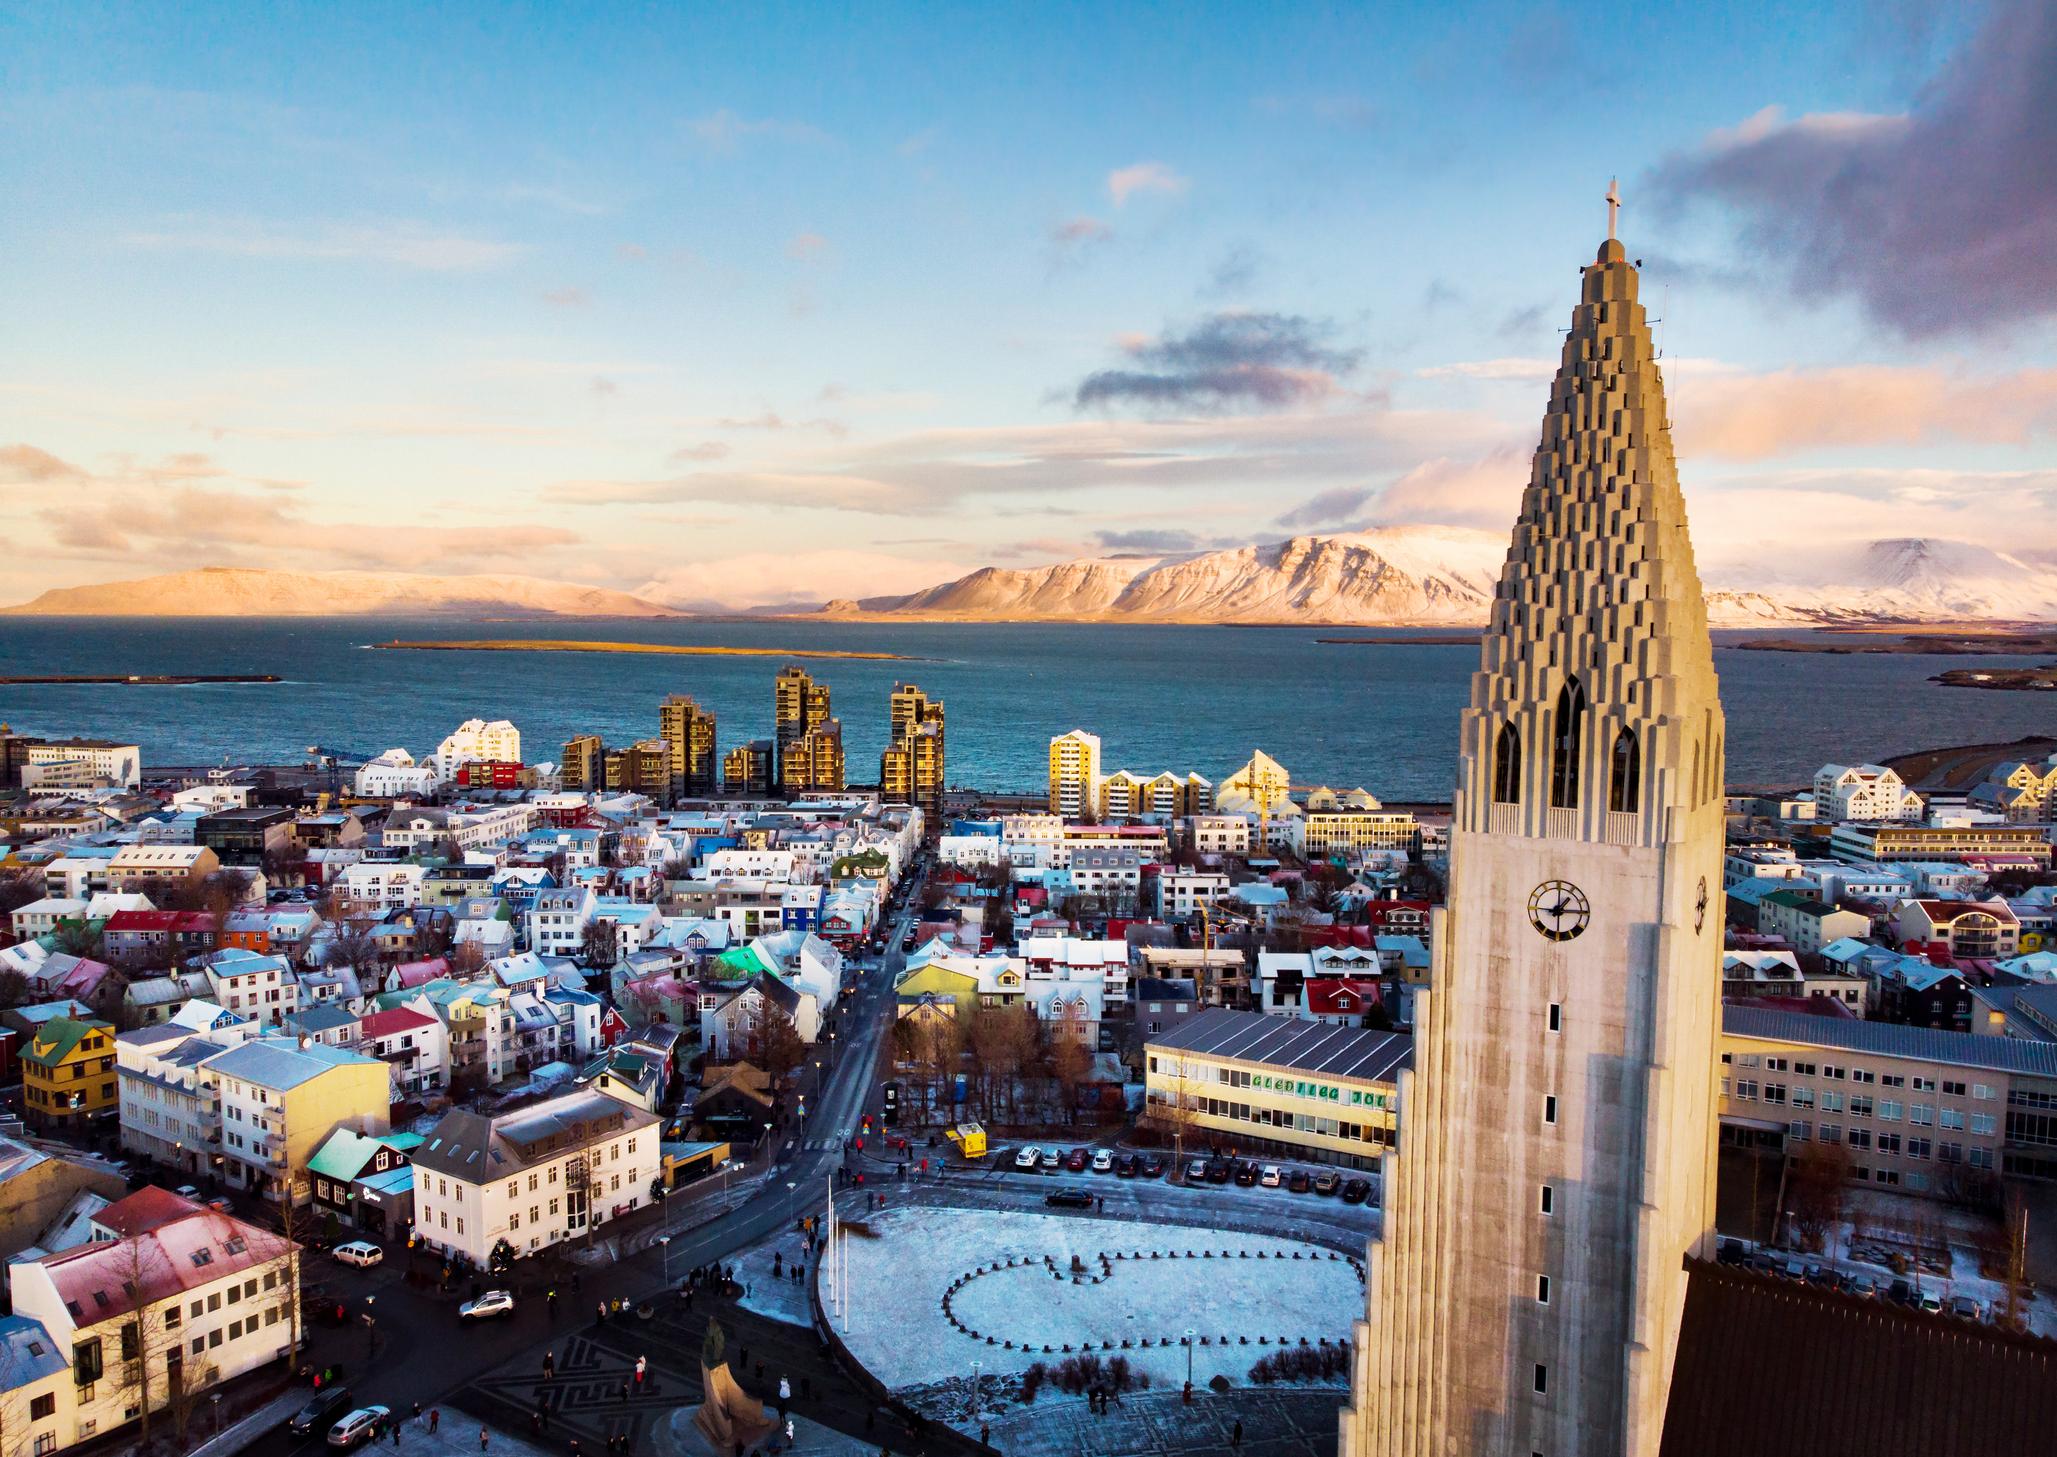 Iceland’s capital Reykjavik